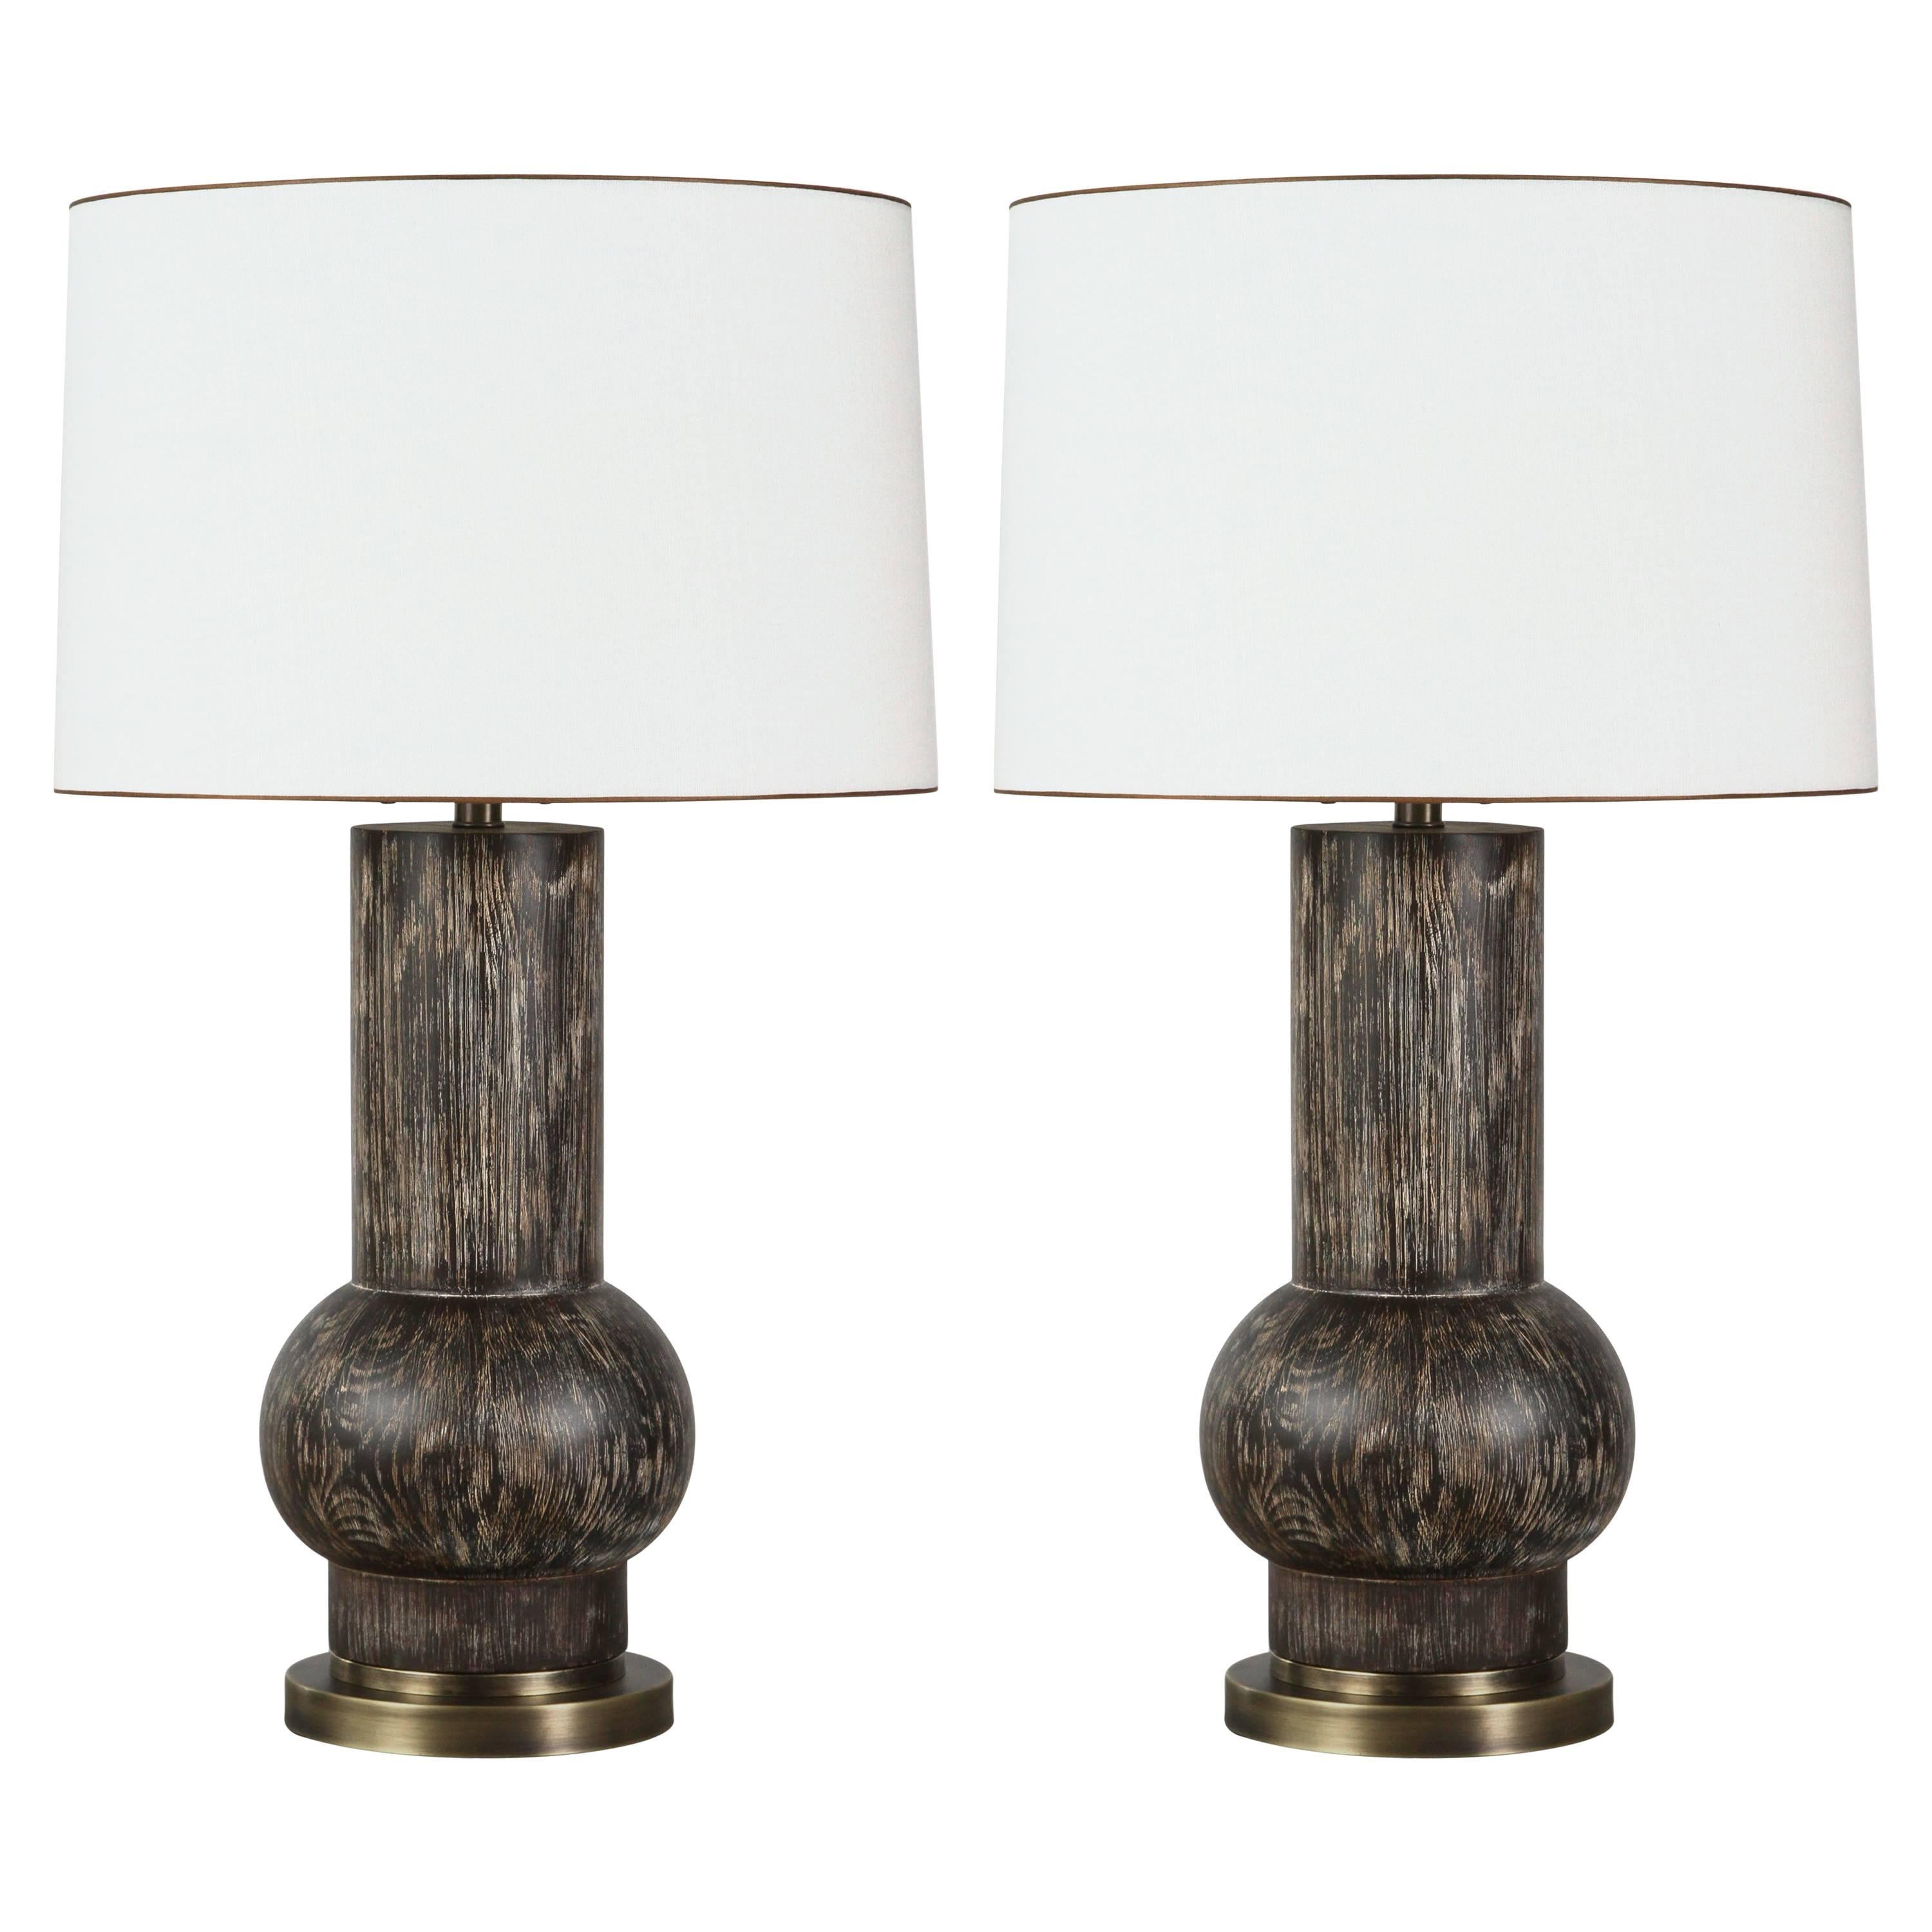 Paul Marra Rustic Modern Table Lamp For Sale